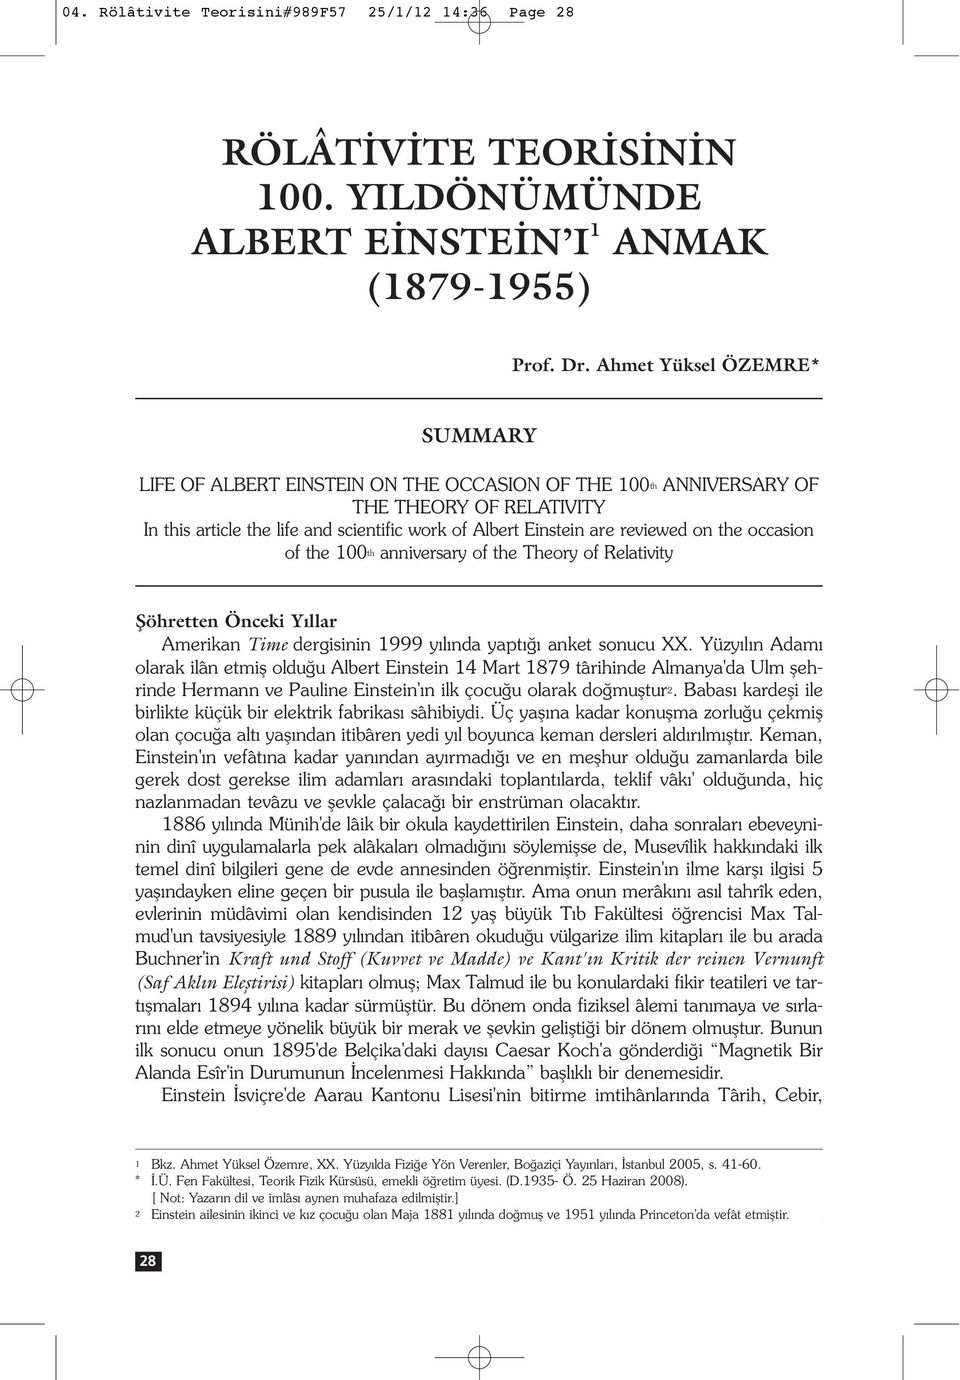 on the occasion of the 100 th anniversary of the Theory of Relativity fiöhretten Önceki Y llar Amerikan Time dergisinin 1999 y l nda yapt anket sonucu XX.